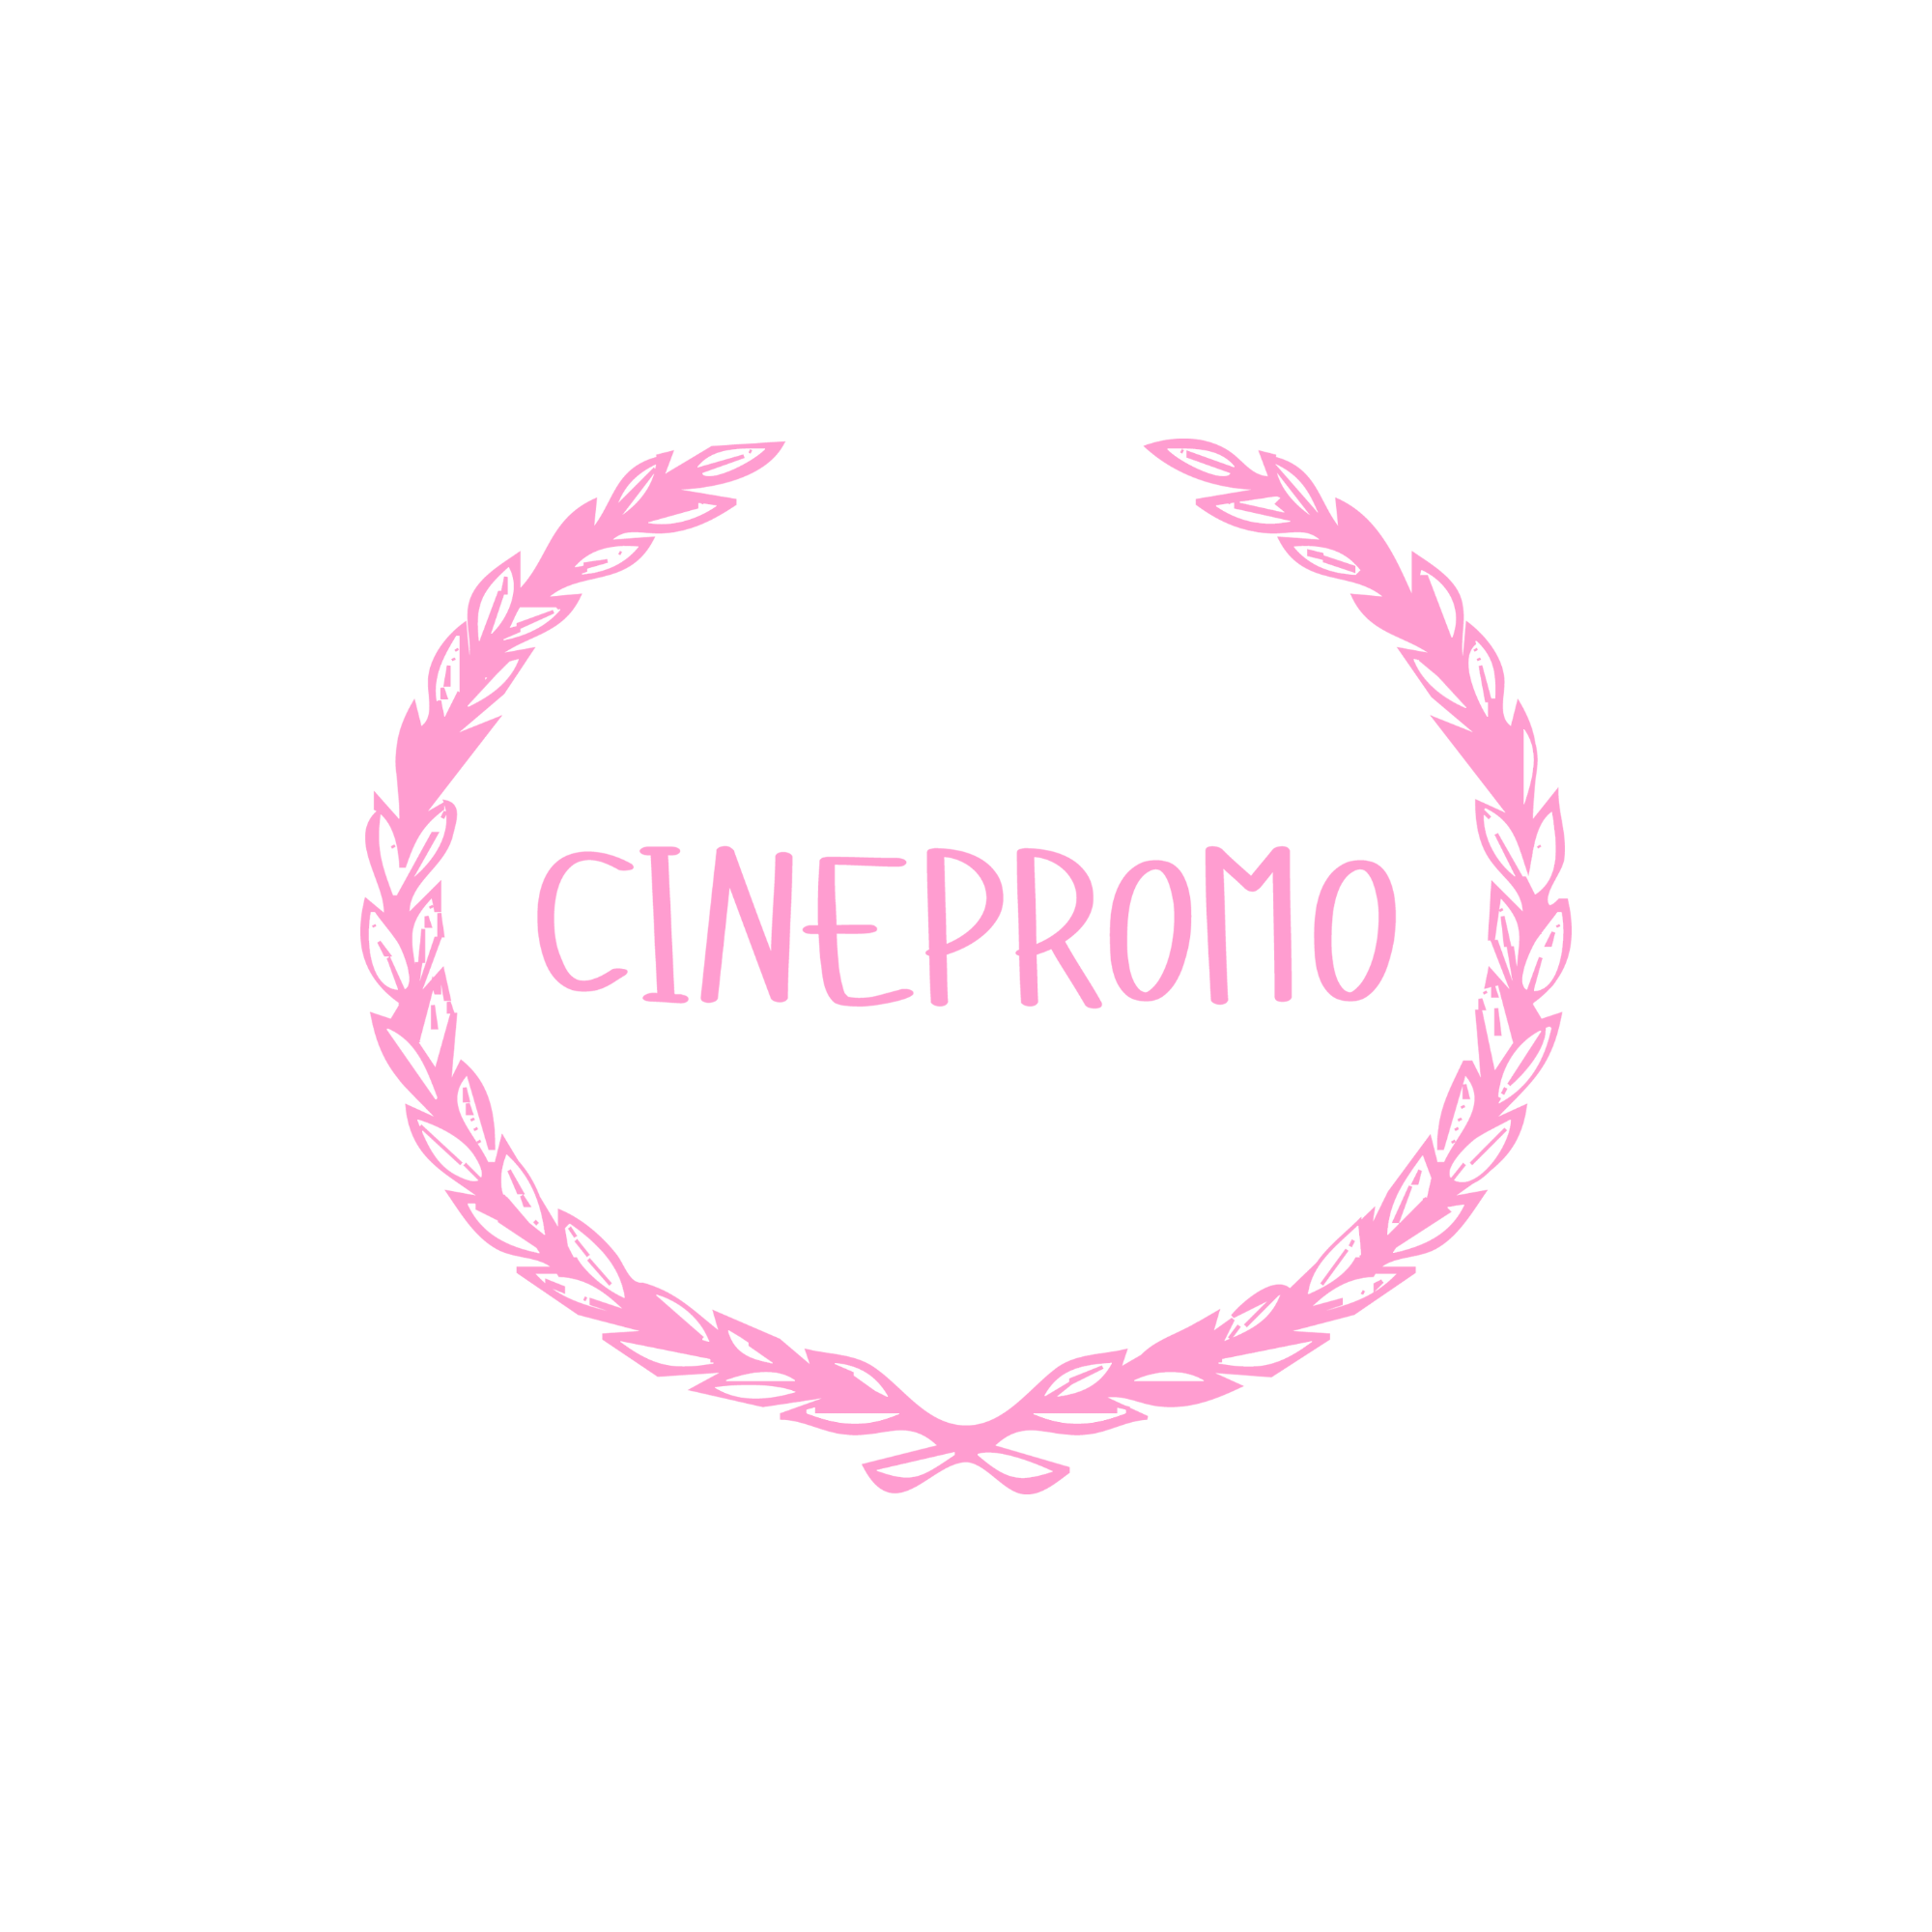 Cinepromo